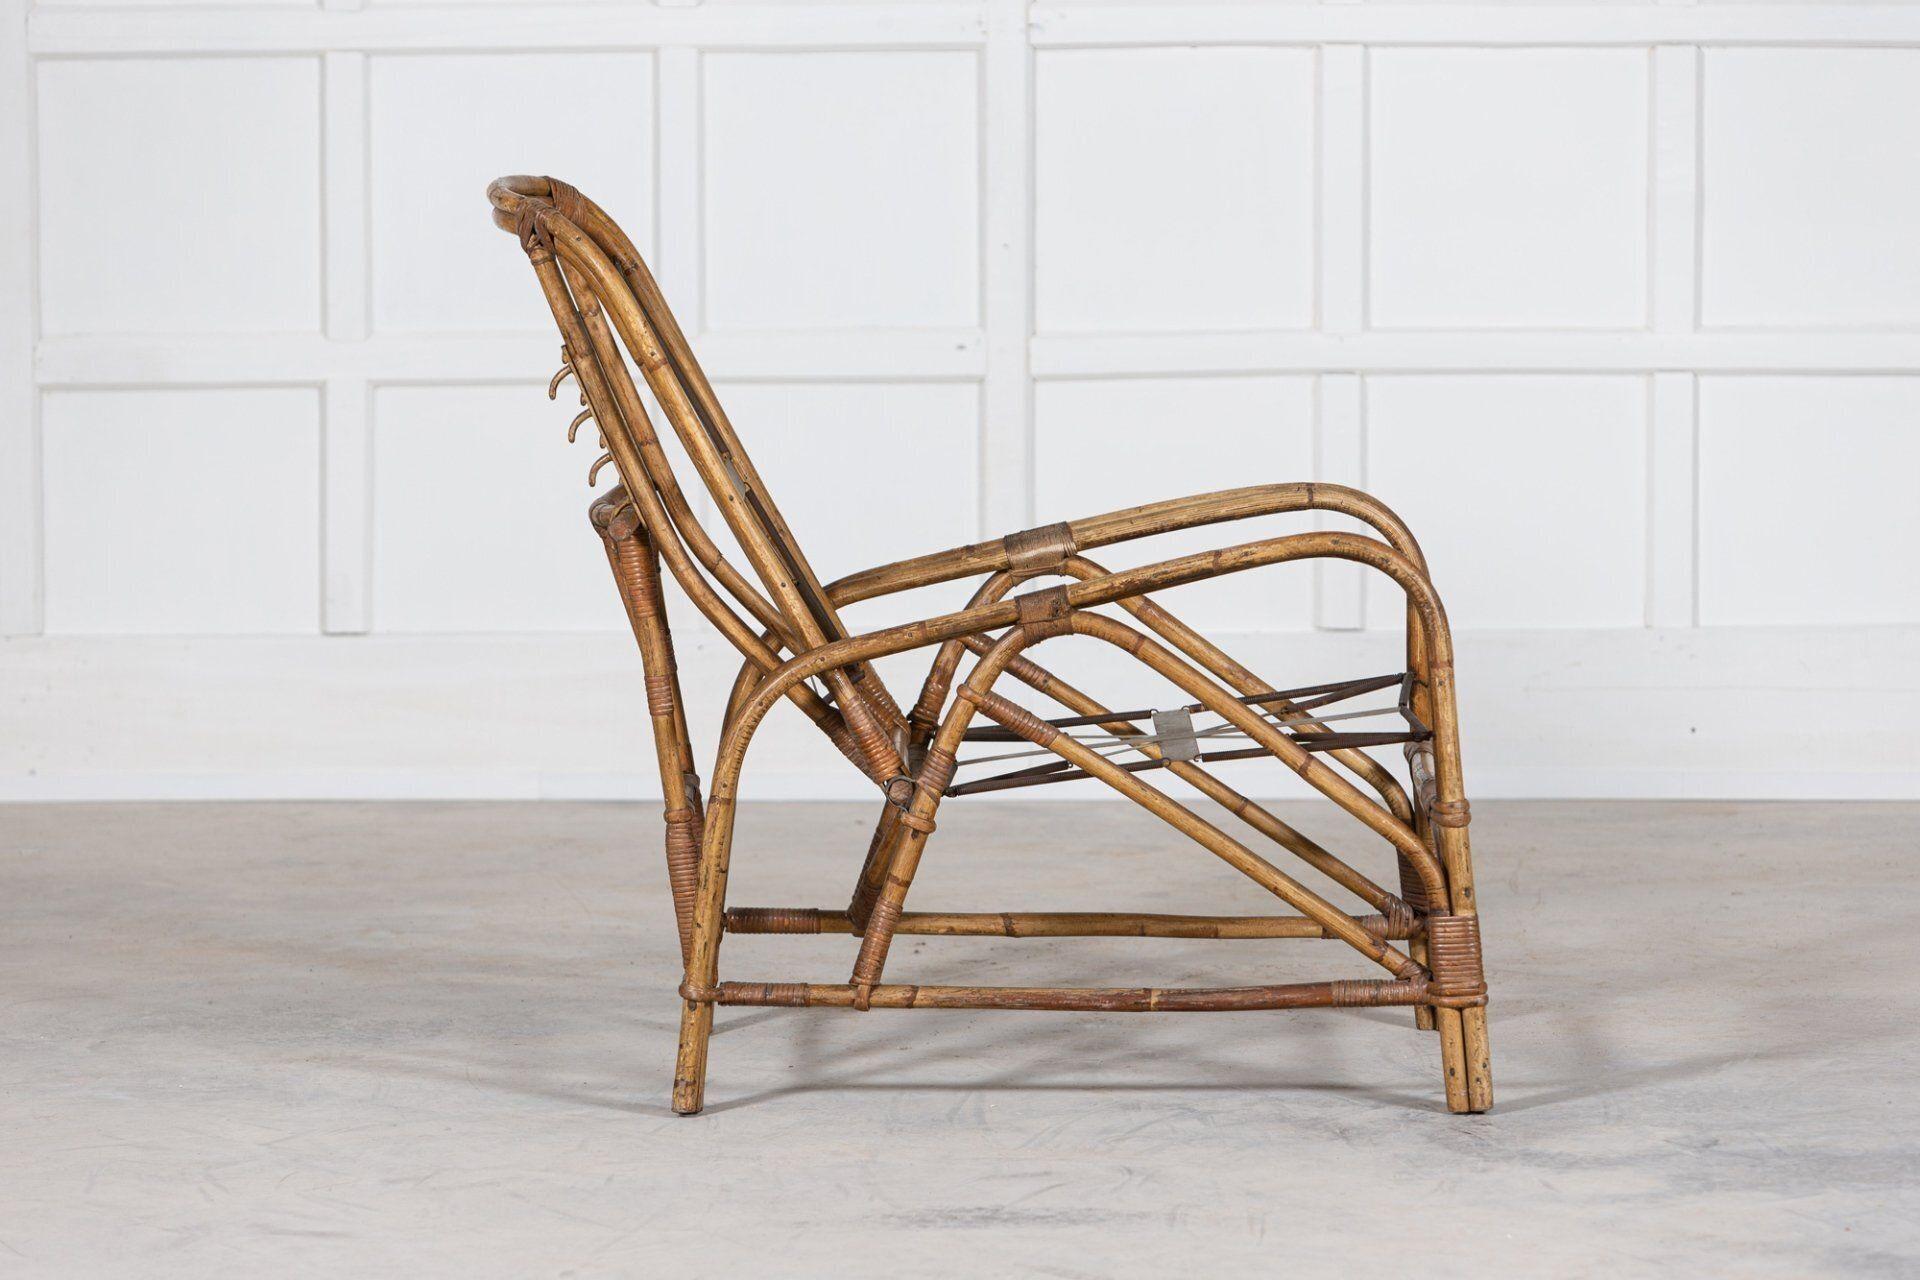 Circa 1950
Mid-century English bamboo reclining armchair.
Sku 1118
W60 x D98 x H91cm.
Seat height 39cm.